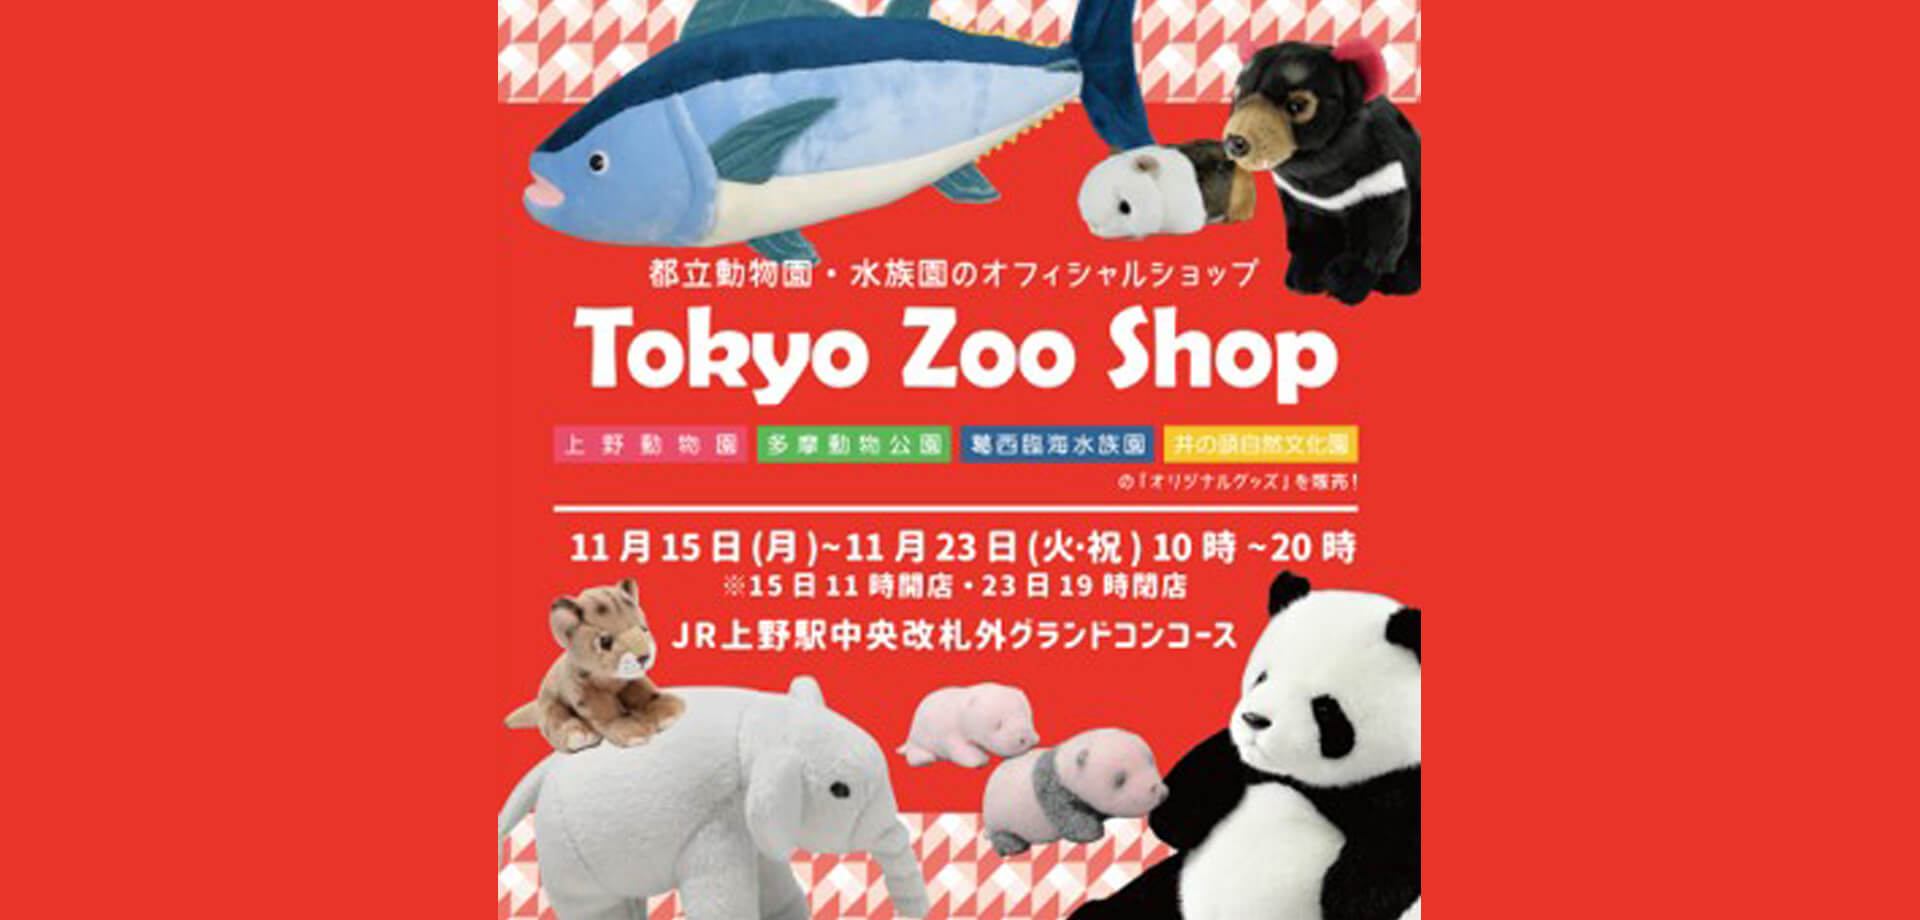 Tokyo Zoo Shop ジャイアントパンダ「シャンシャン」